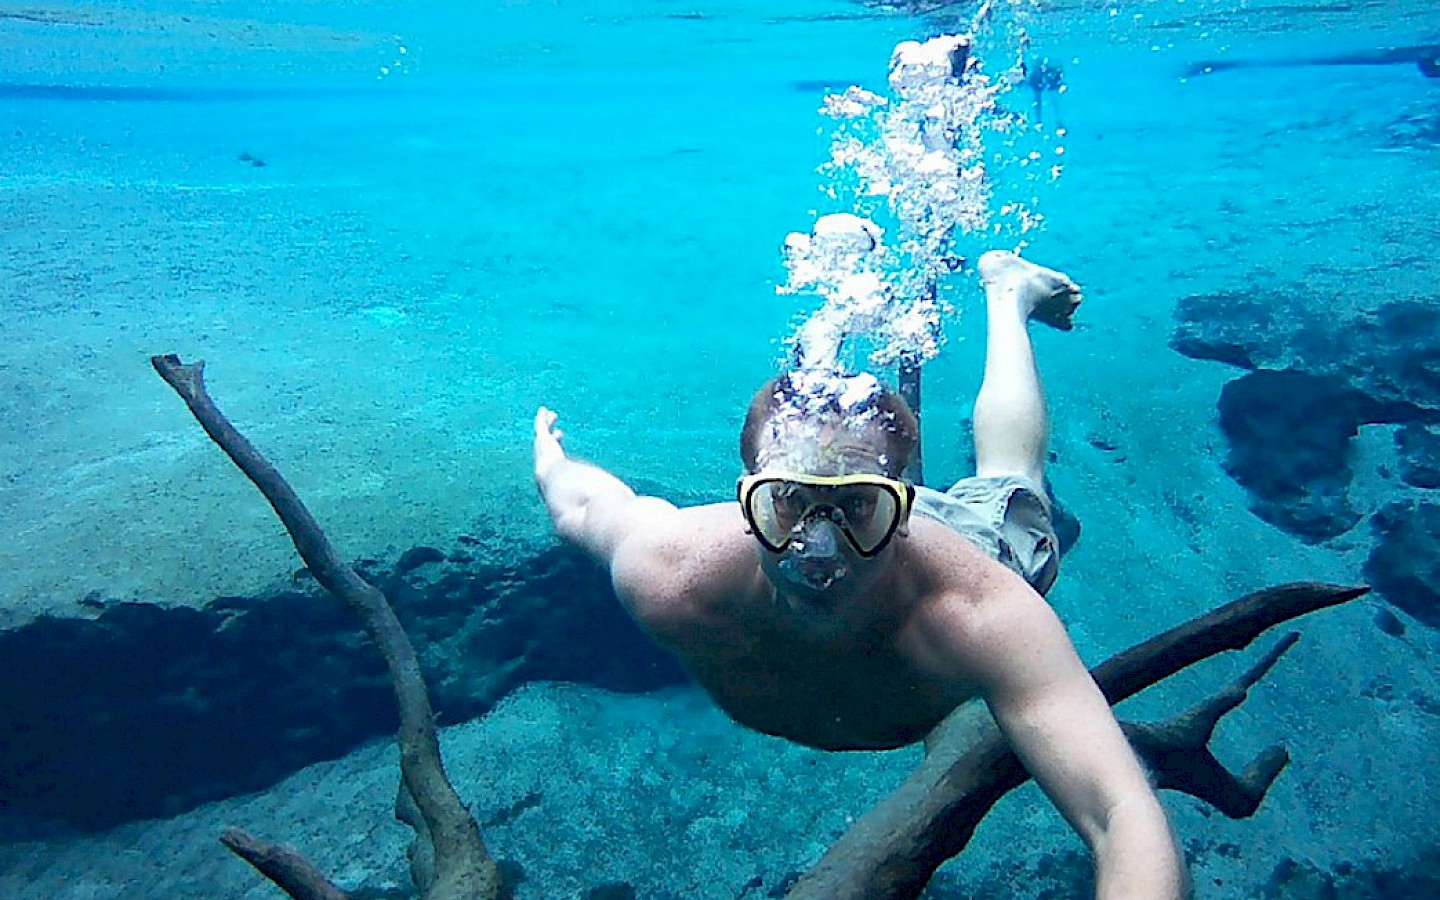 a free-diver snorkling underwater